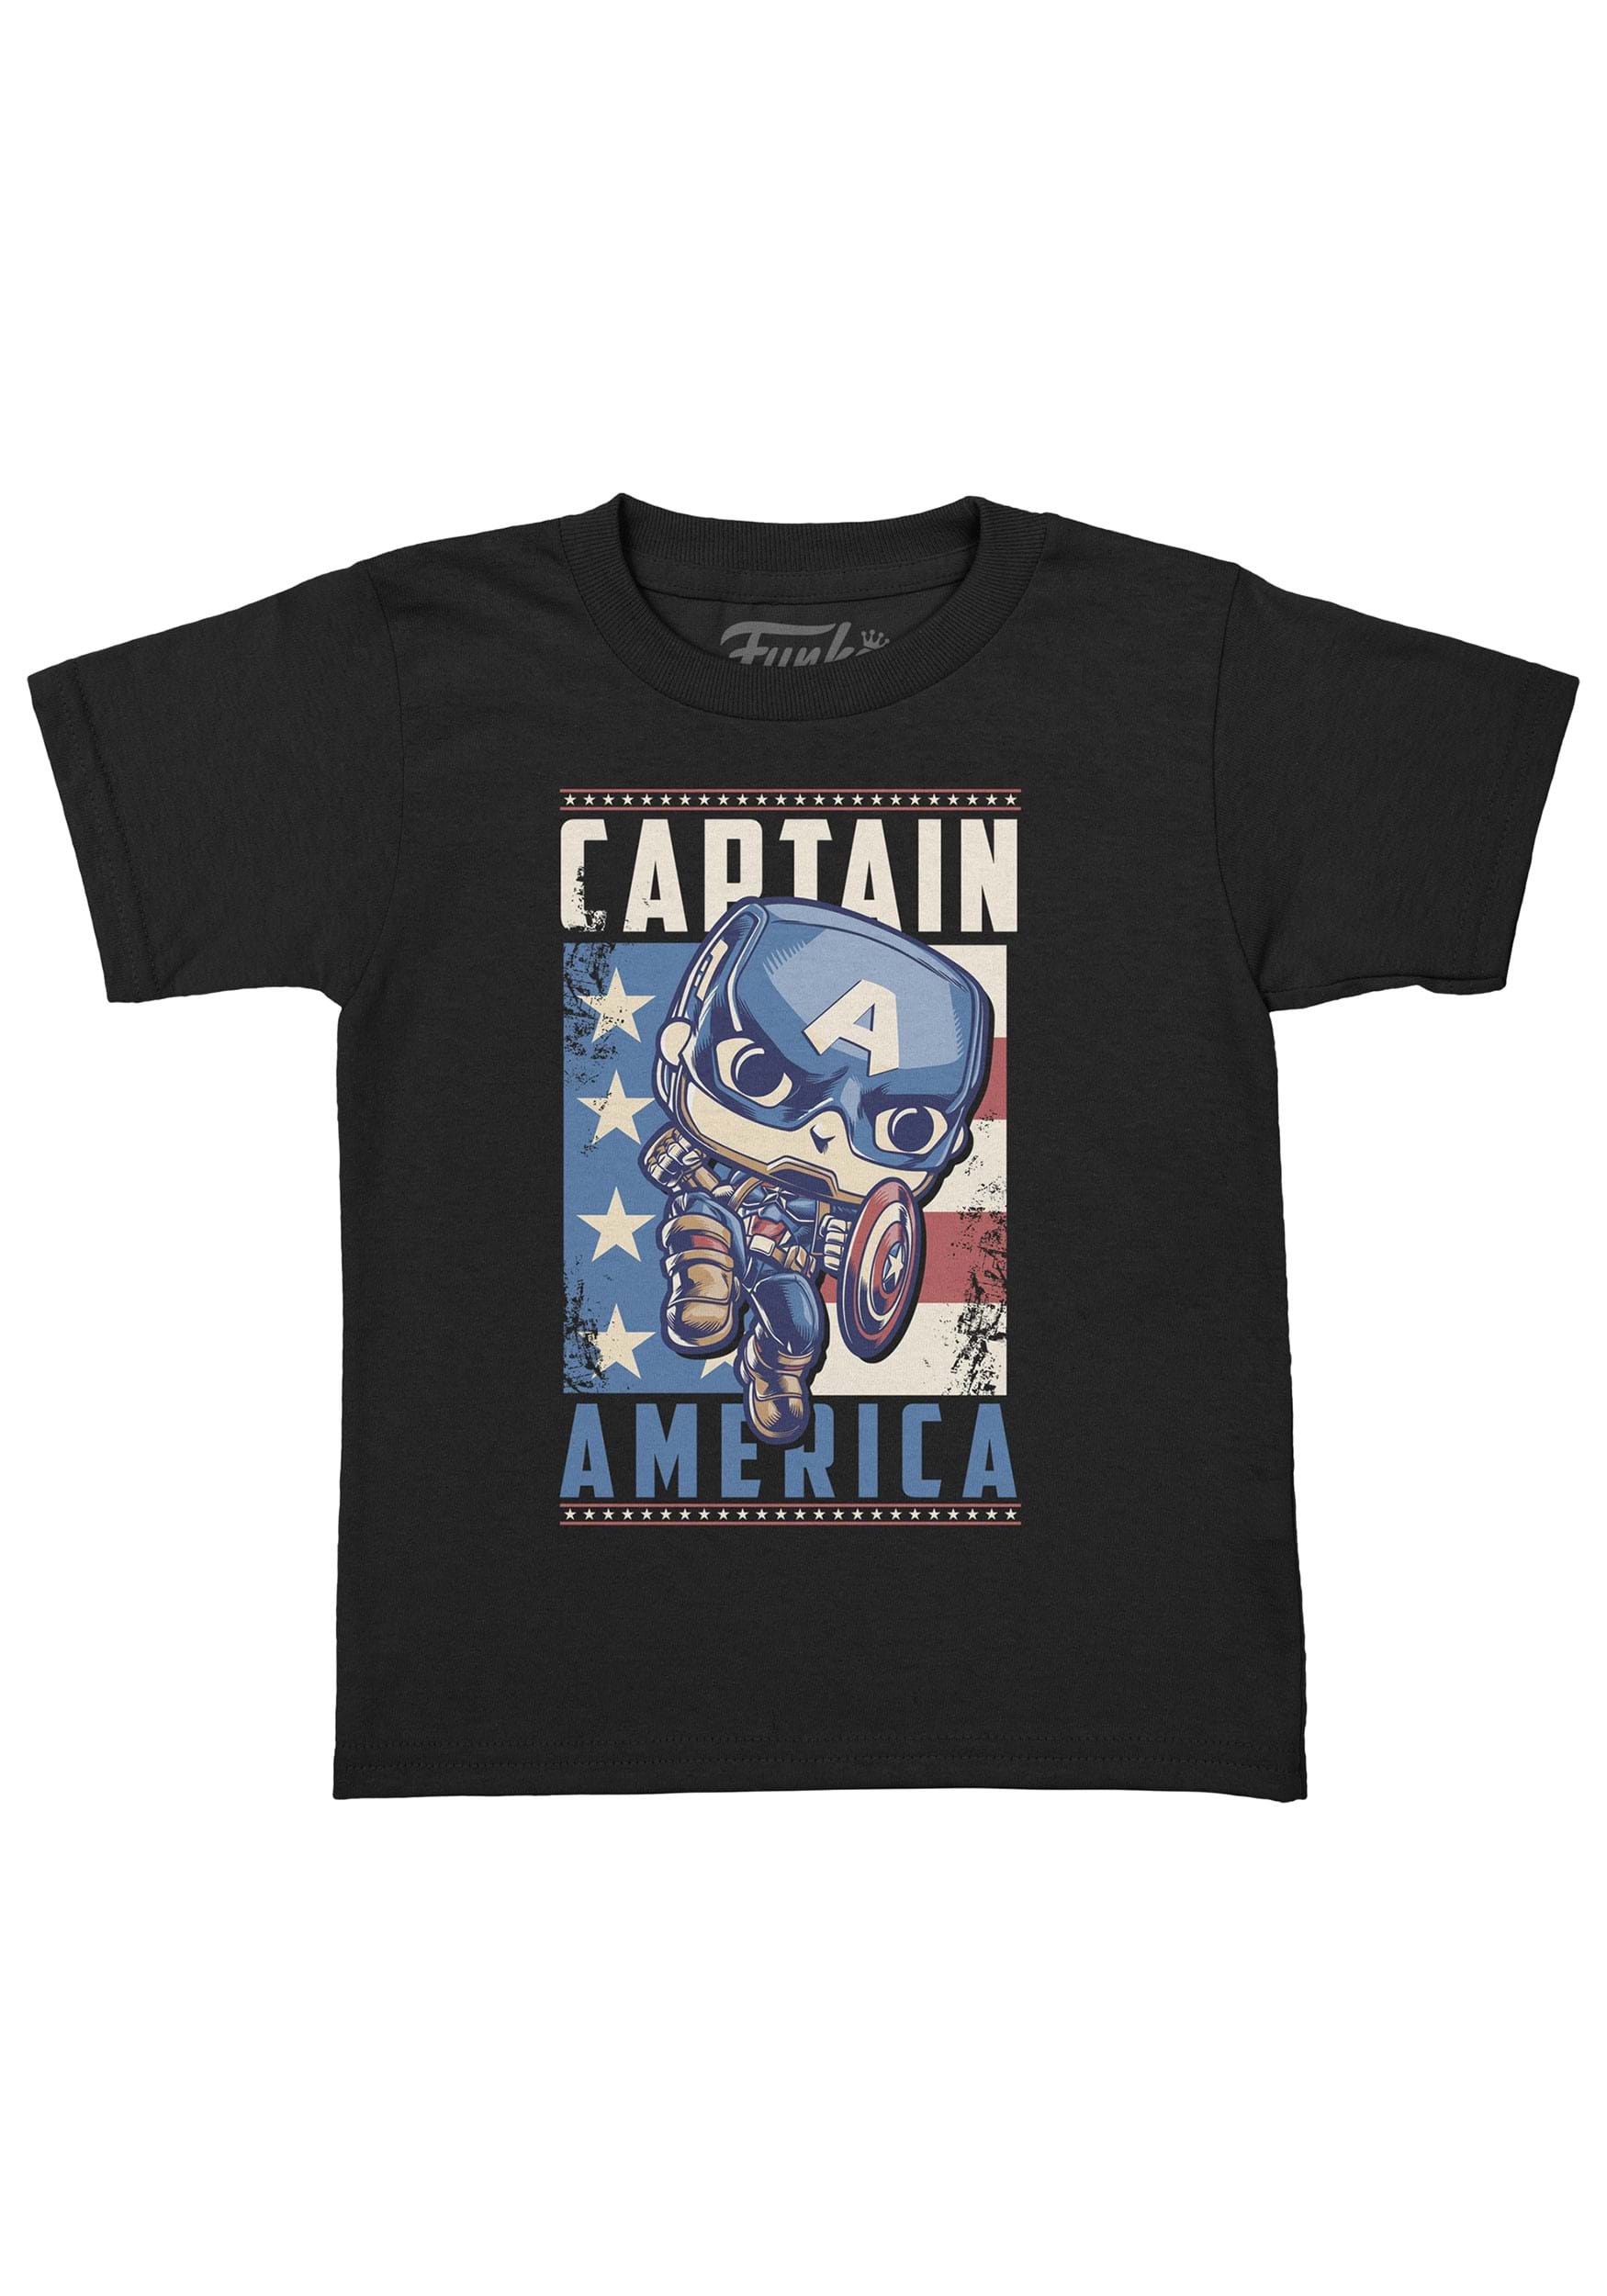 Pocket POP! & Tee: Marvel - Captain America Youth Shirt